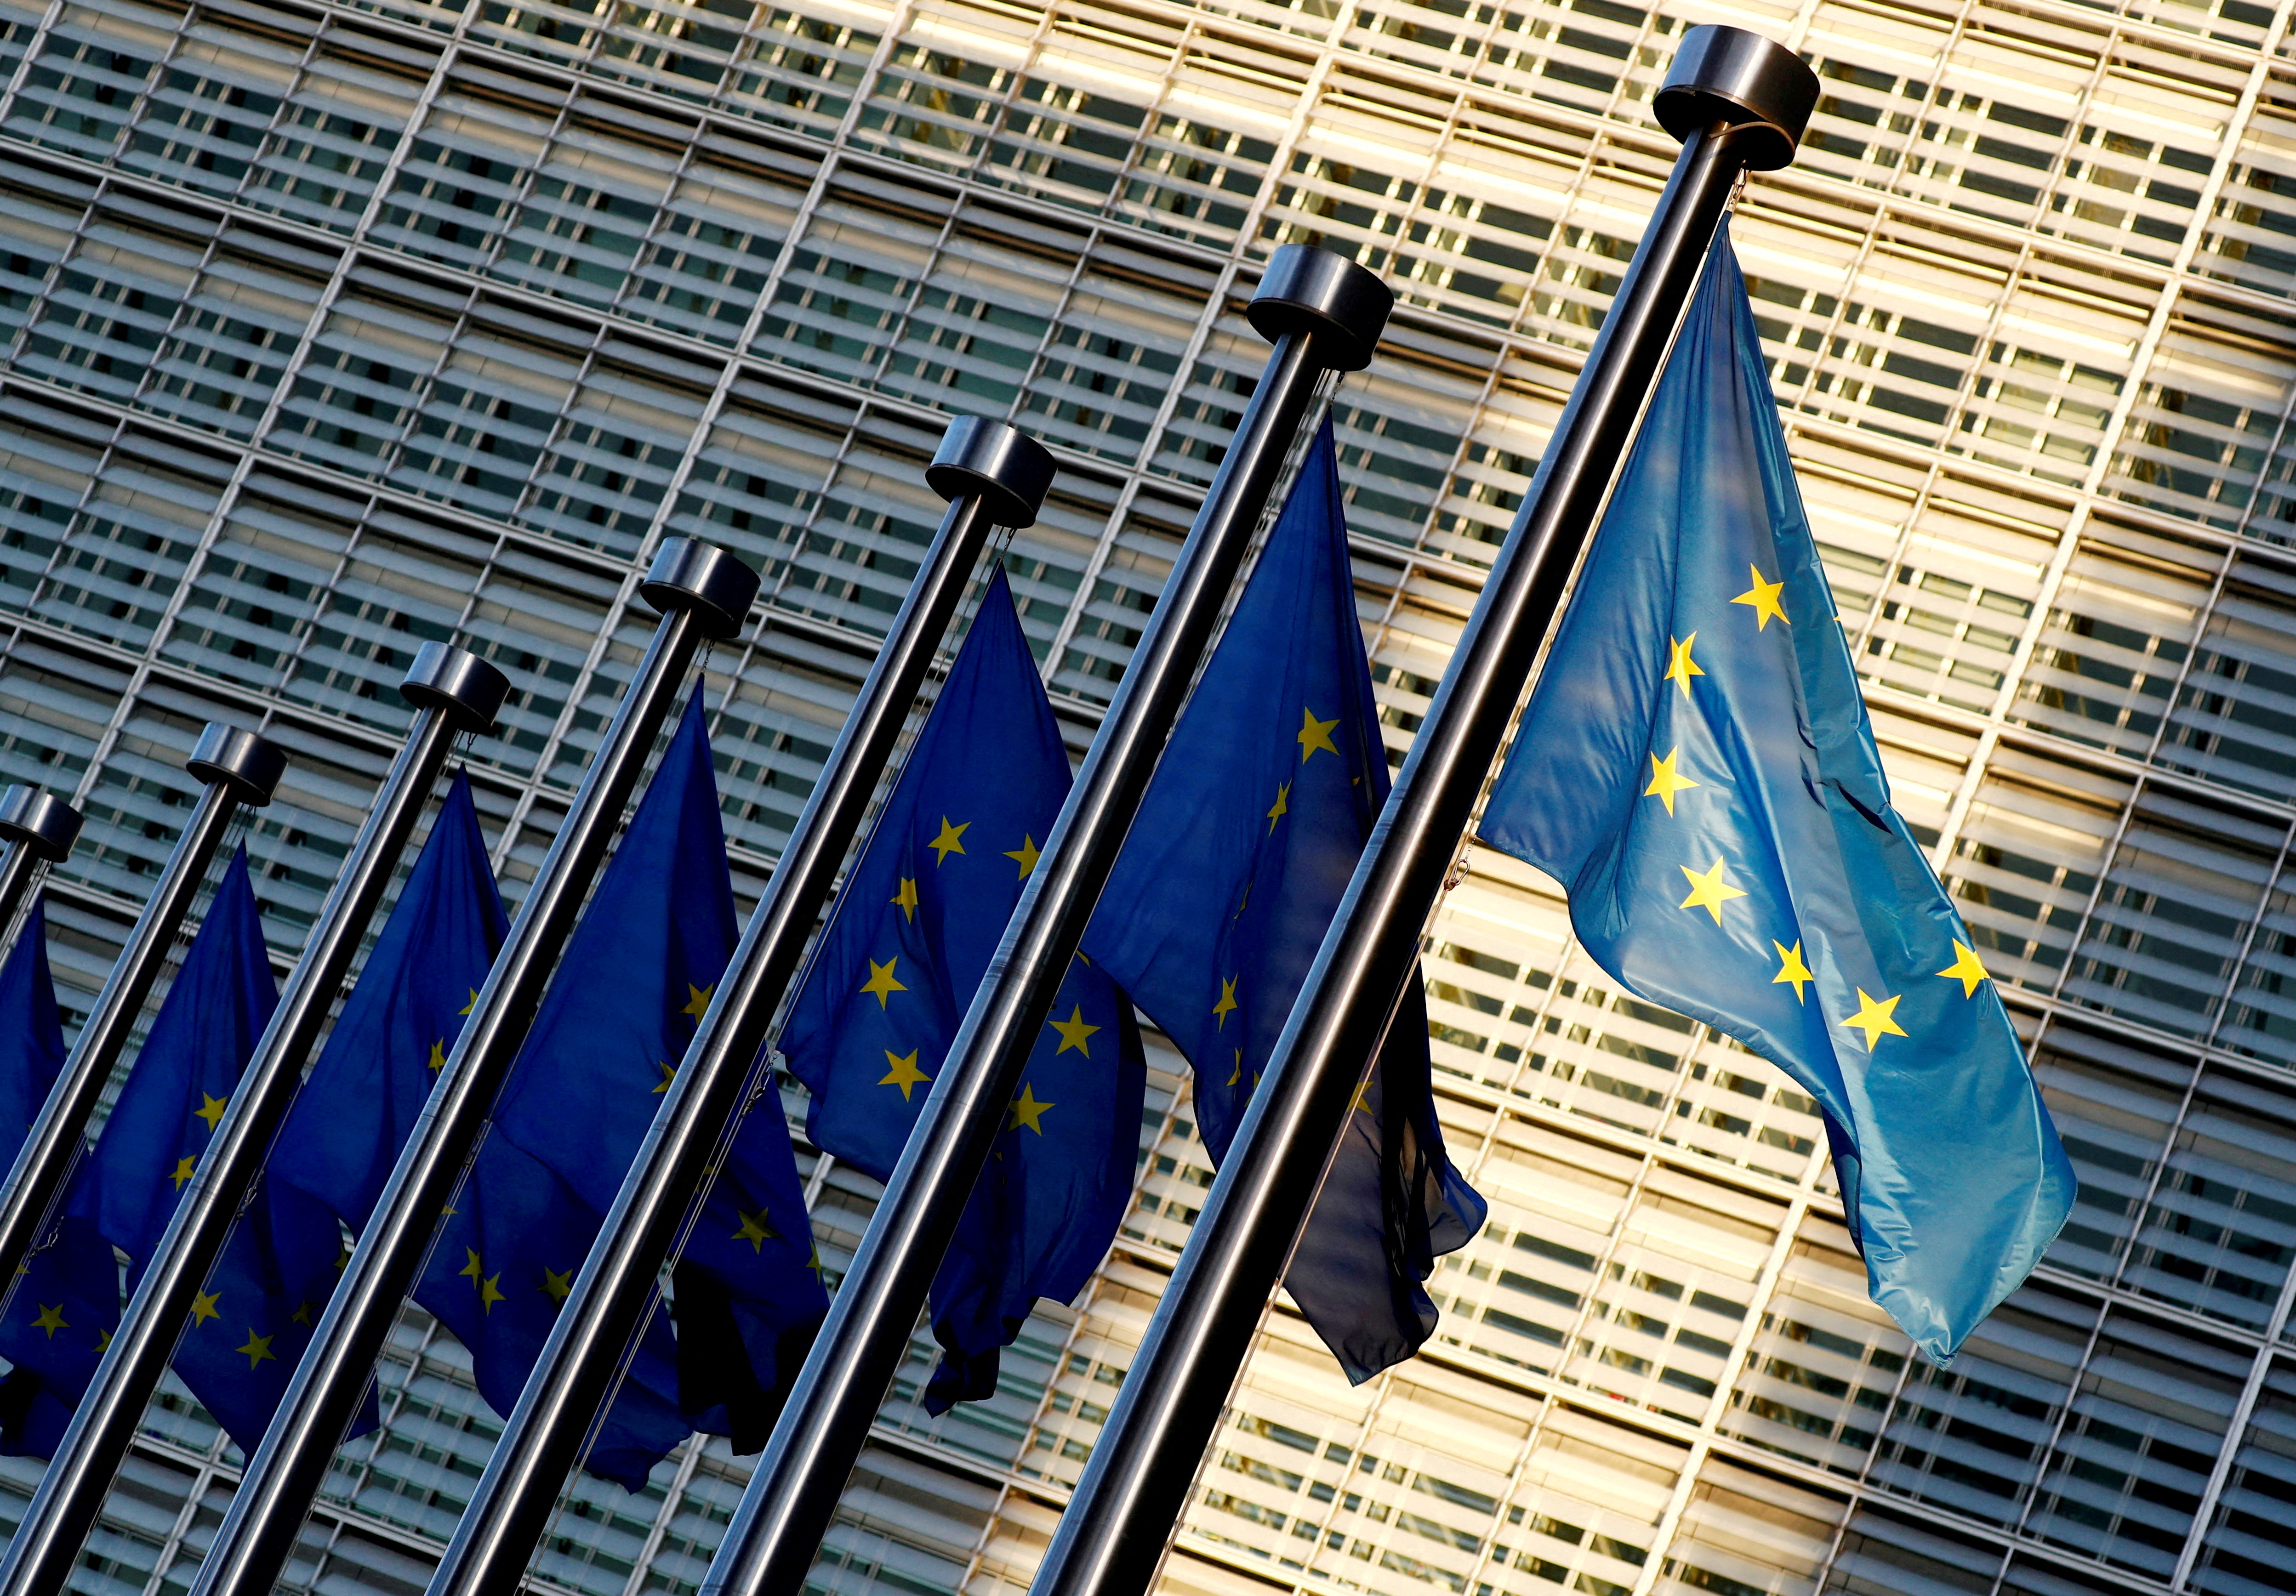 European Union flags are seen outside the EU Commission headquarters in Brussels, Belgium November 14, 2018. REUTERS/Francois Lenoir/File Photo